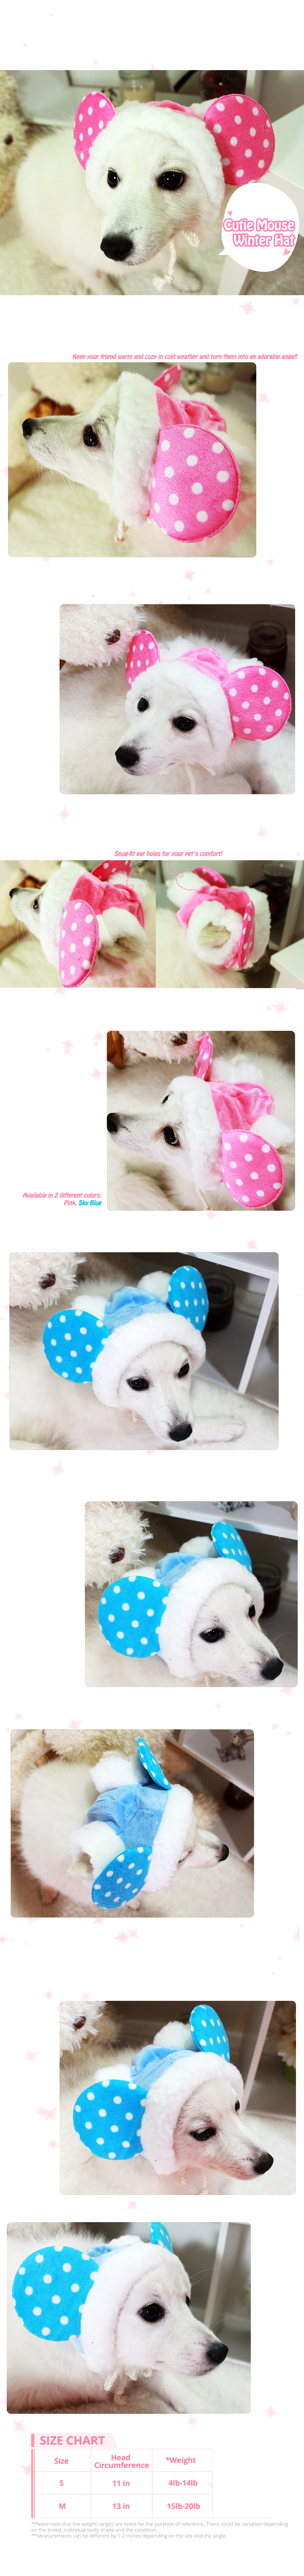 cutie-mouse-winter-hat2.png